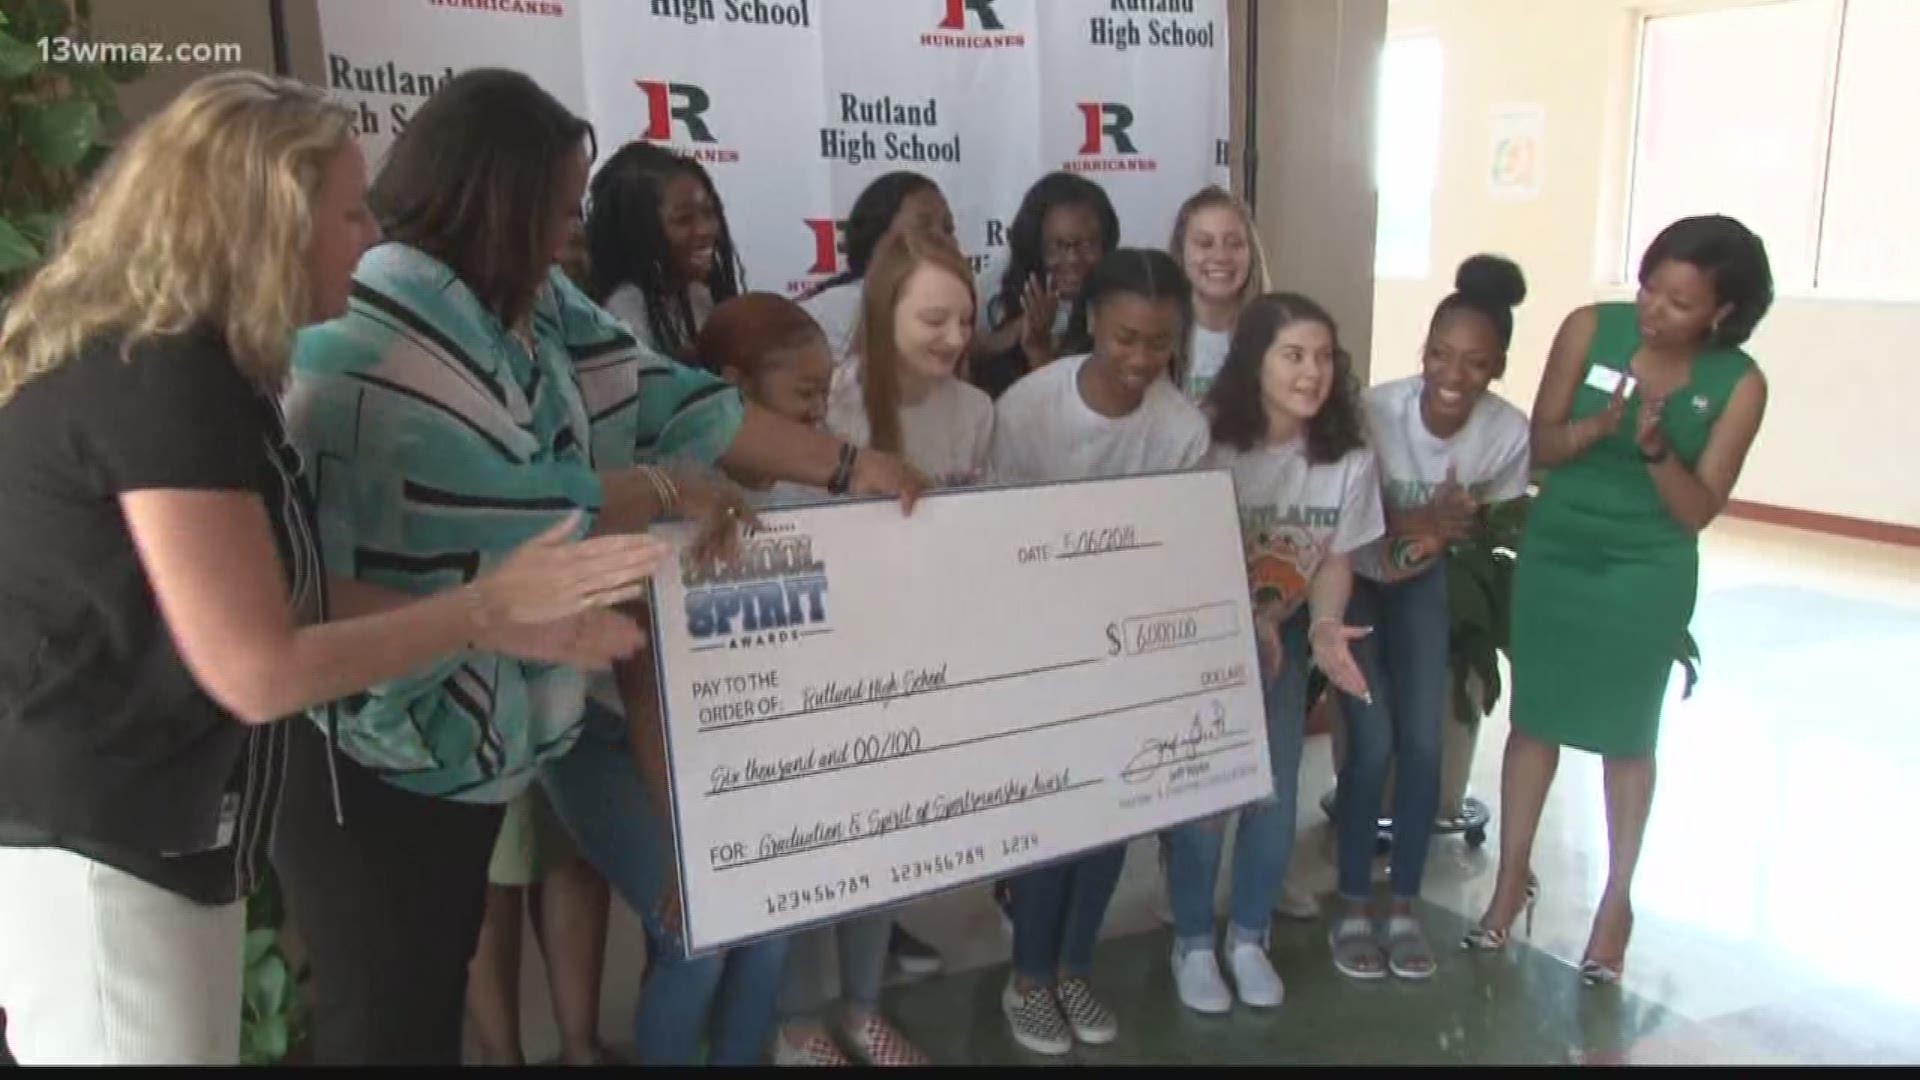 Rutland High School's cheerleading team is celebrating after winning $6,000 in awards for their stellar sportsmanship.